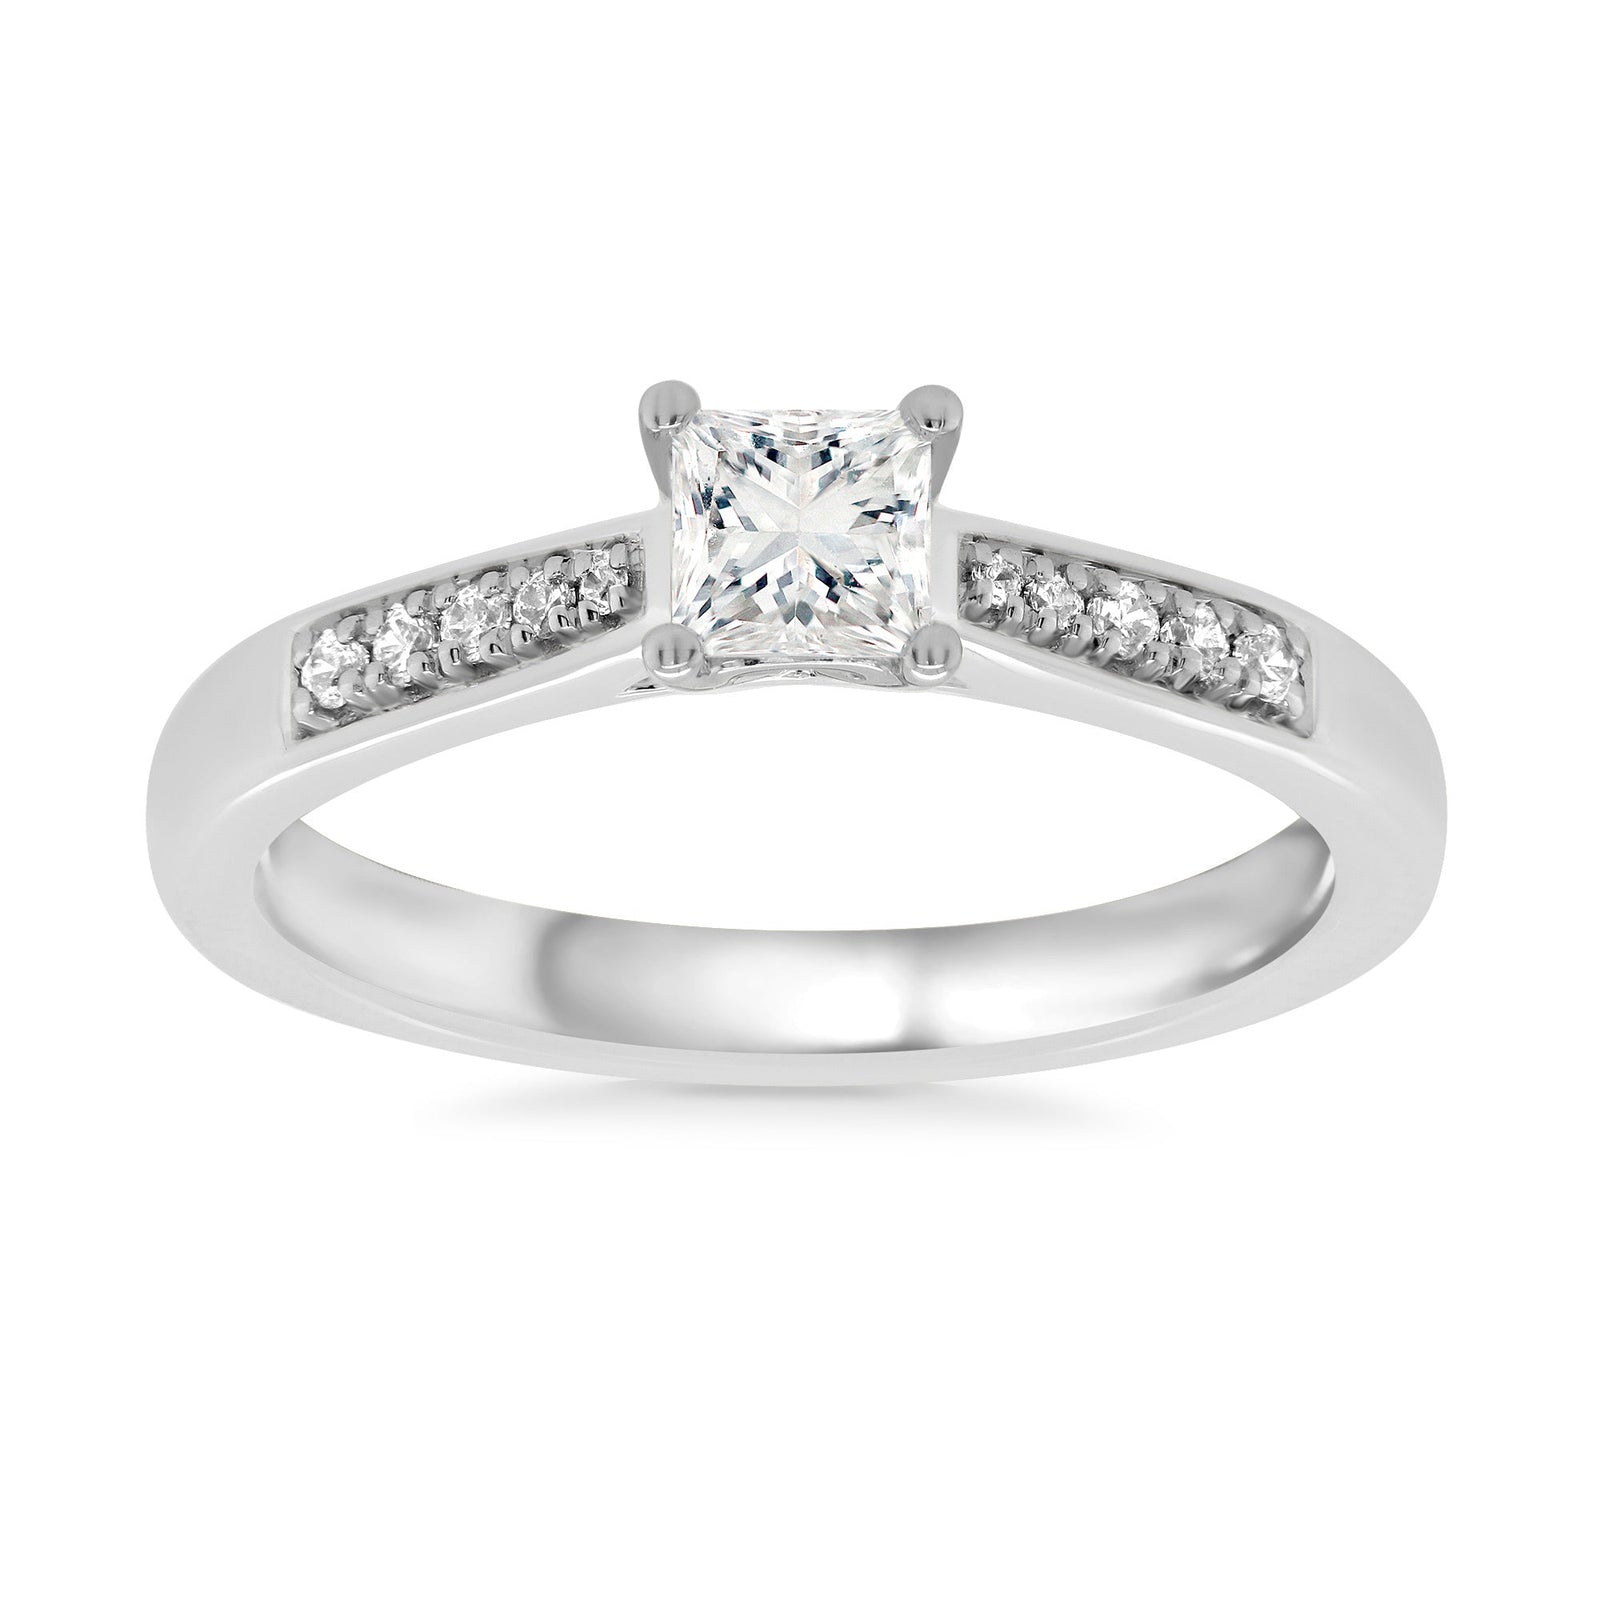 9ct white gold princess cut single stone diamond ring with diamond set shoulders 0.41ct